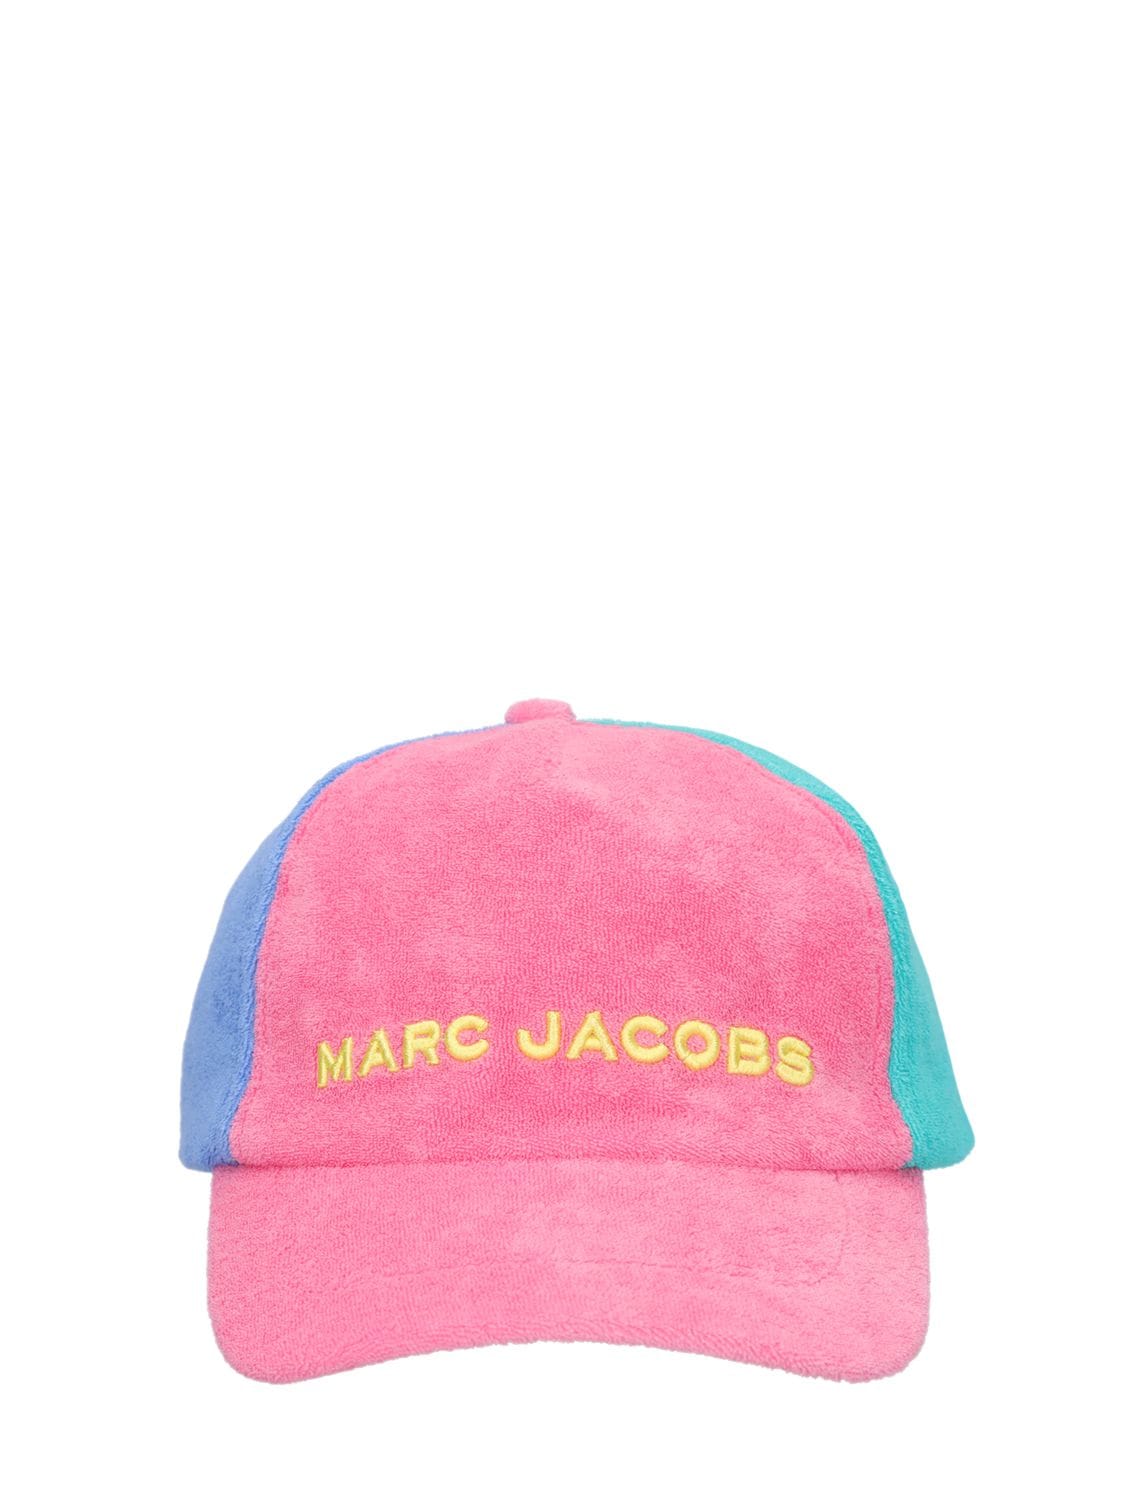 MARC JACOBS colour BLOCK TERRY CLOTH BASEBALL CAP